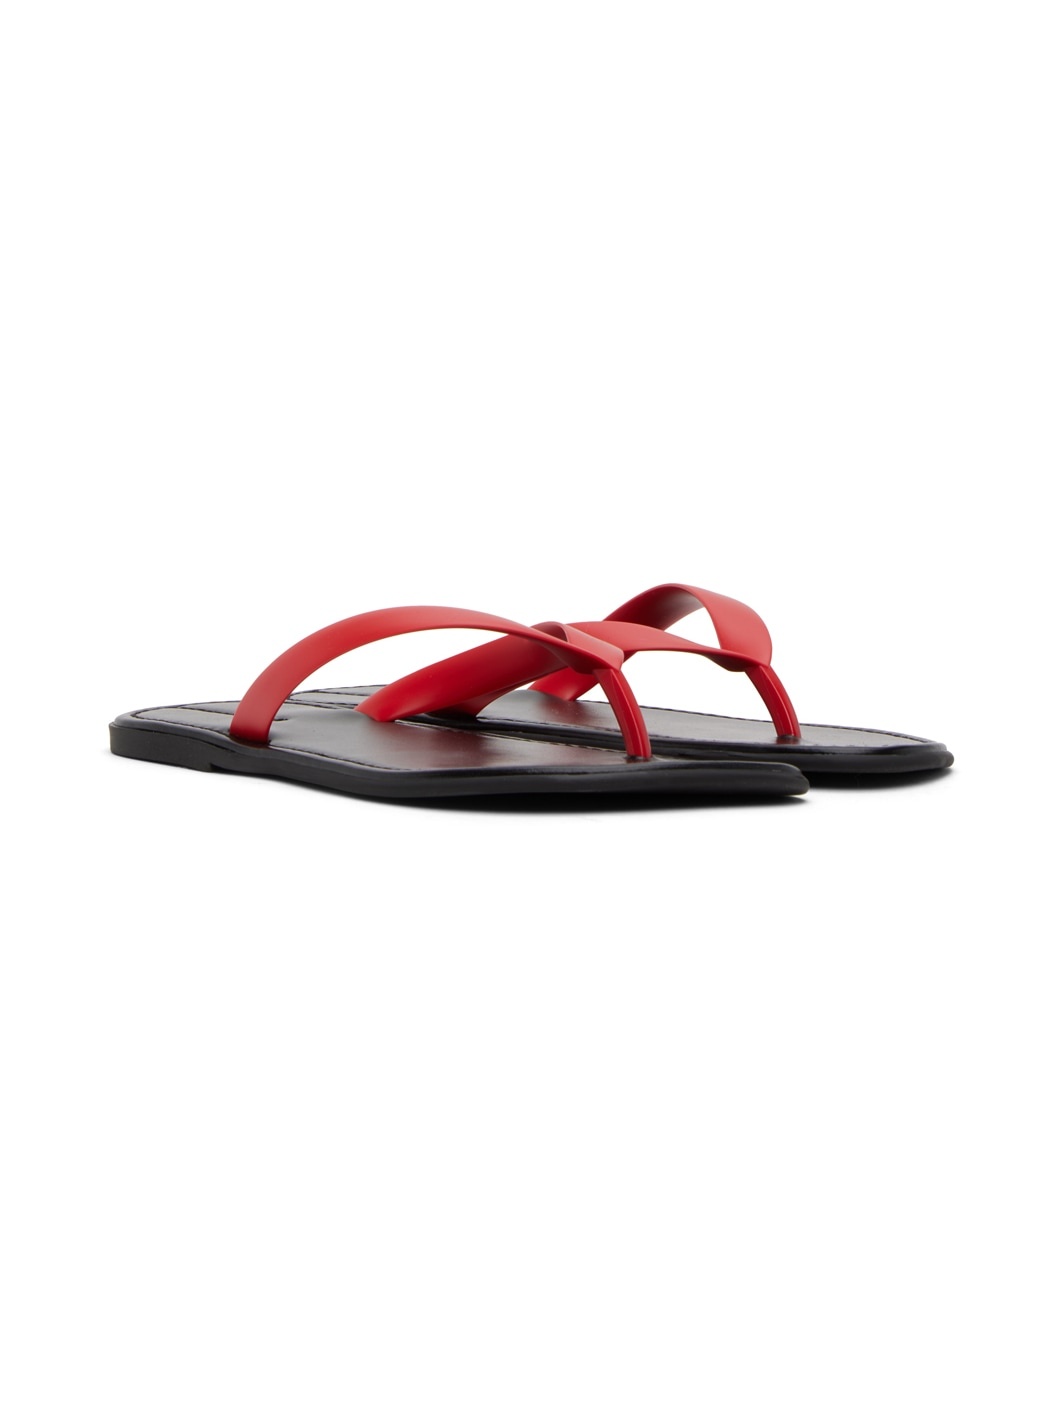 Red & Black Beach Sandals - 4